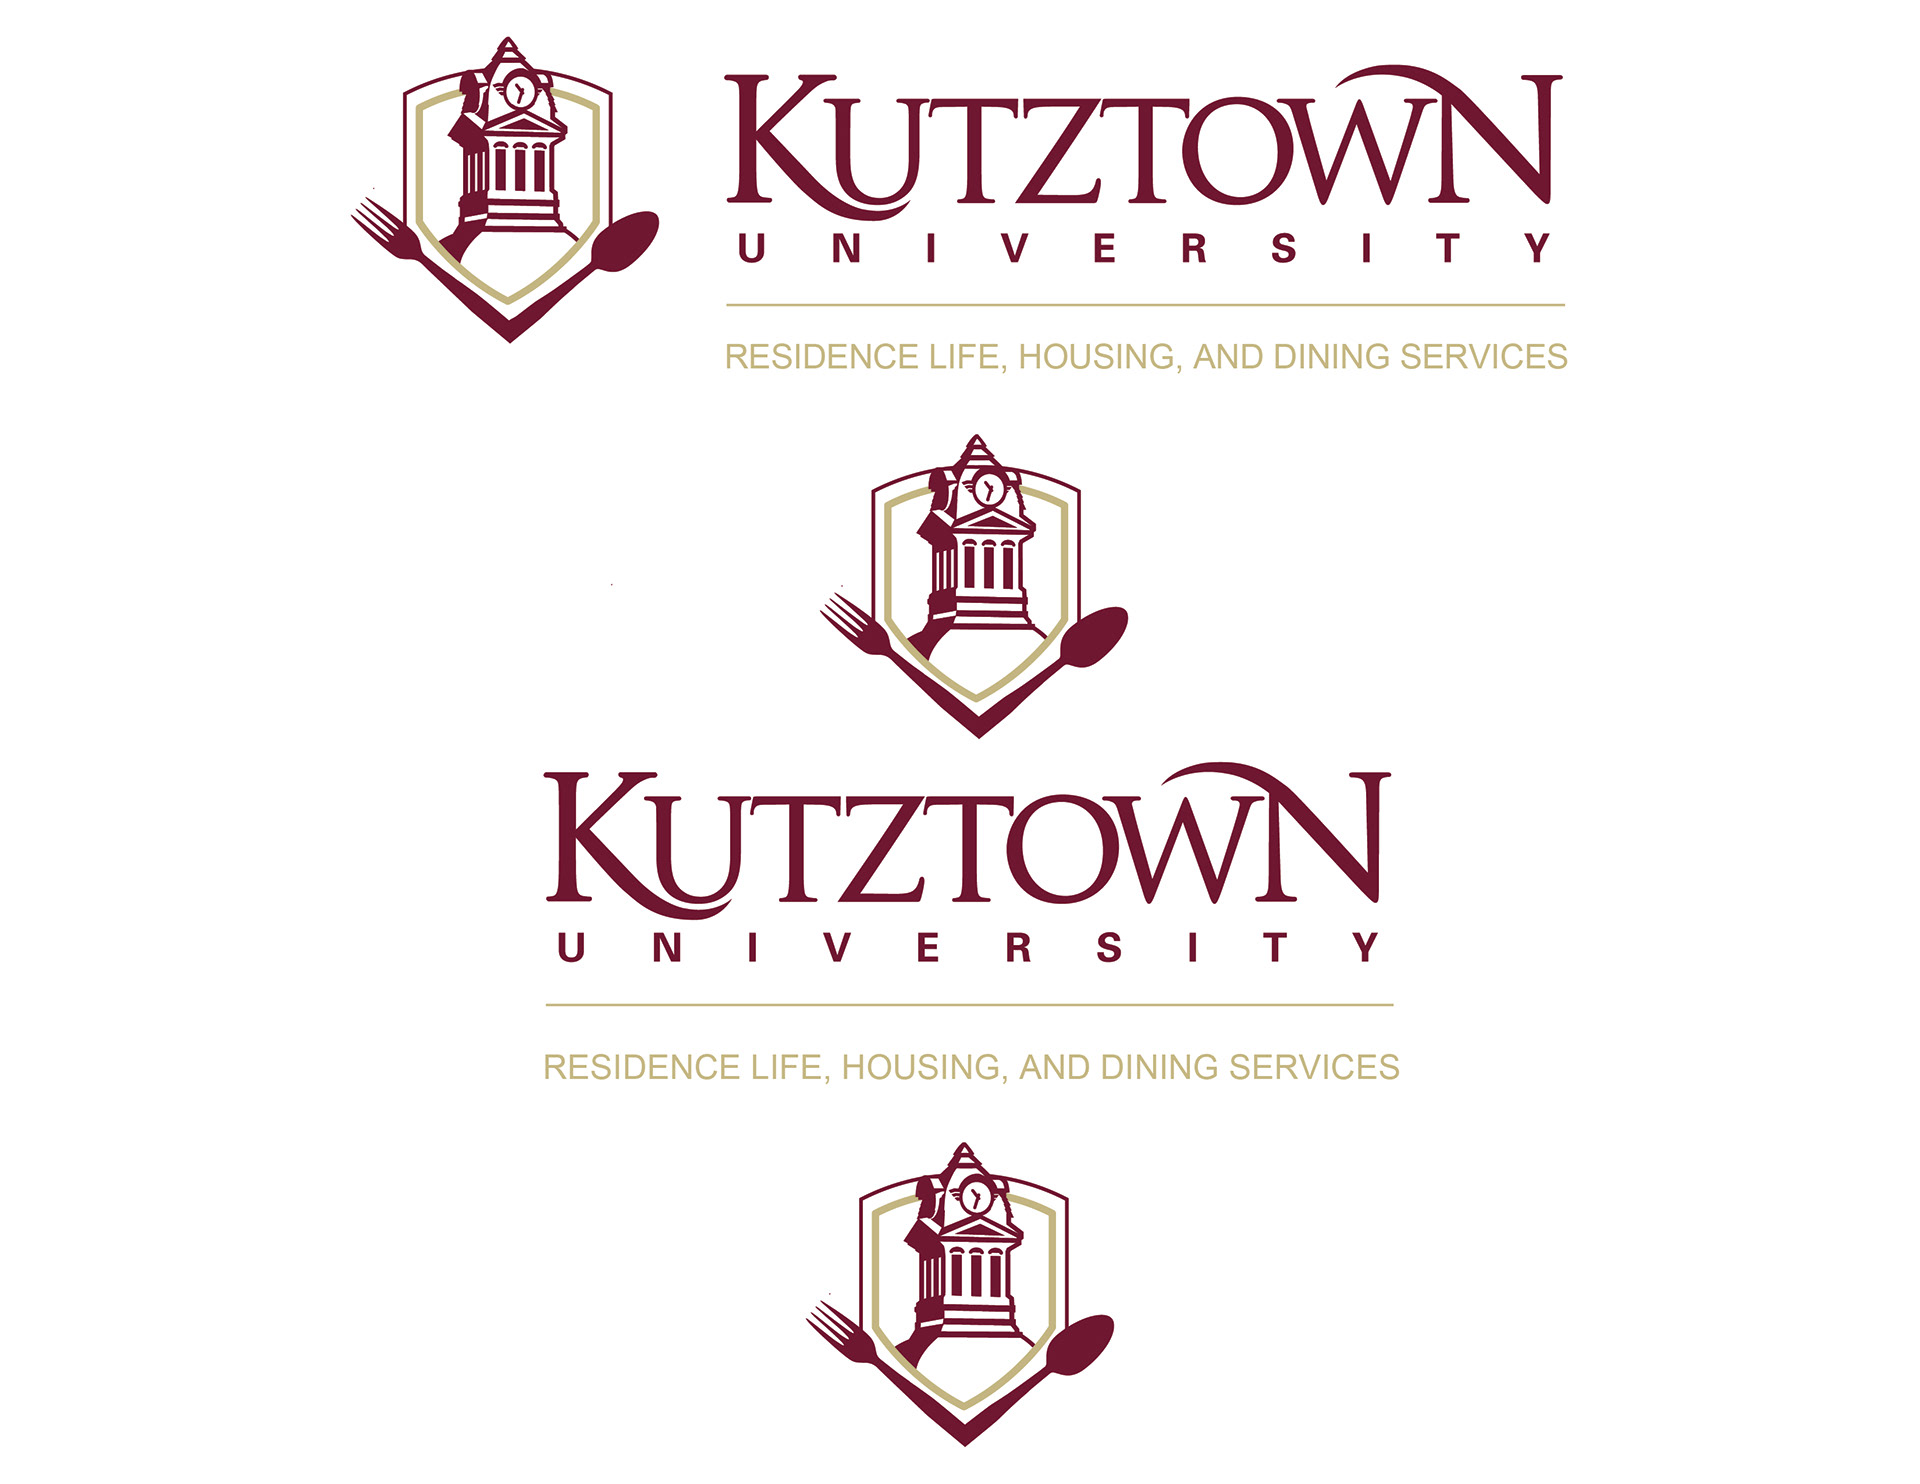 Office of Student Involvement at Kutztown University